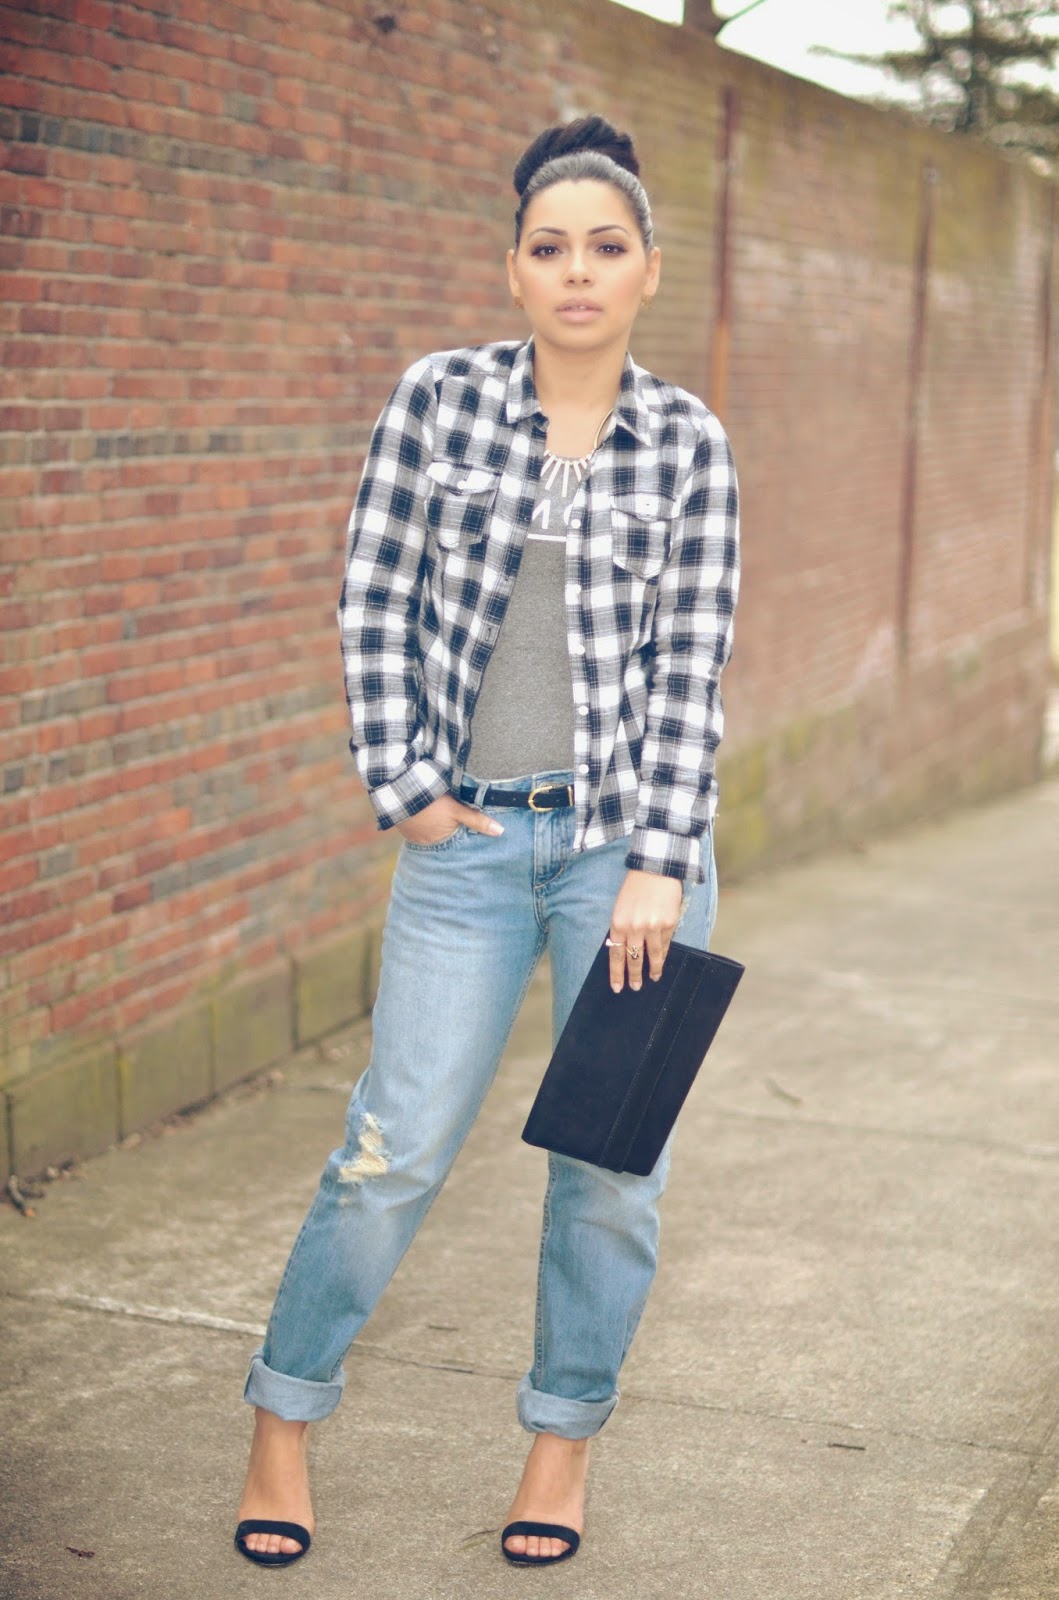 Boyfriend Jeans | The Style Brunch